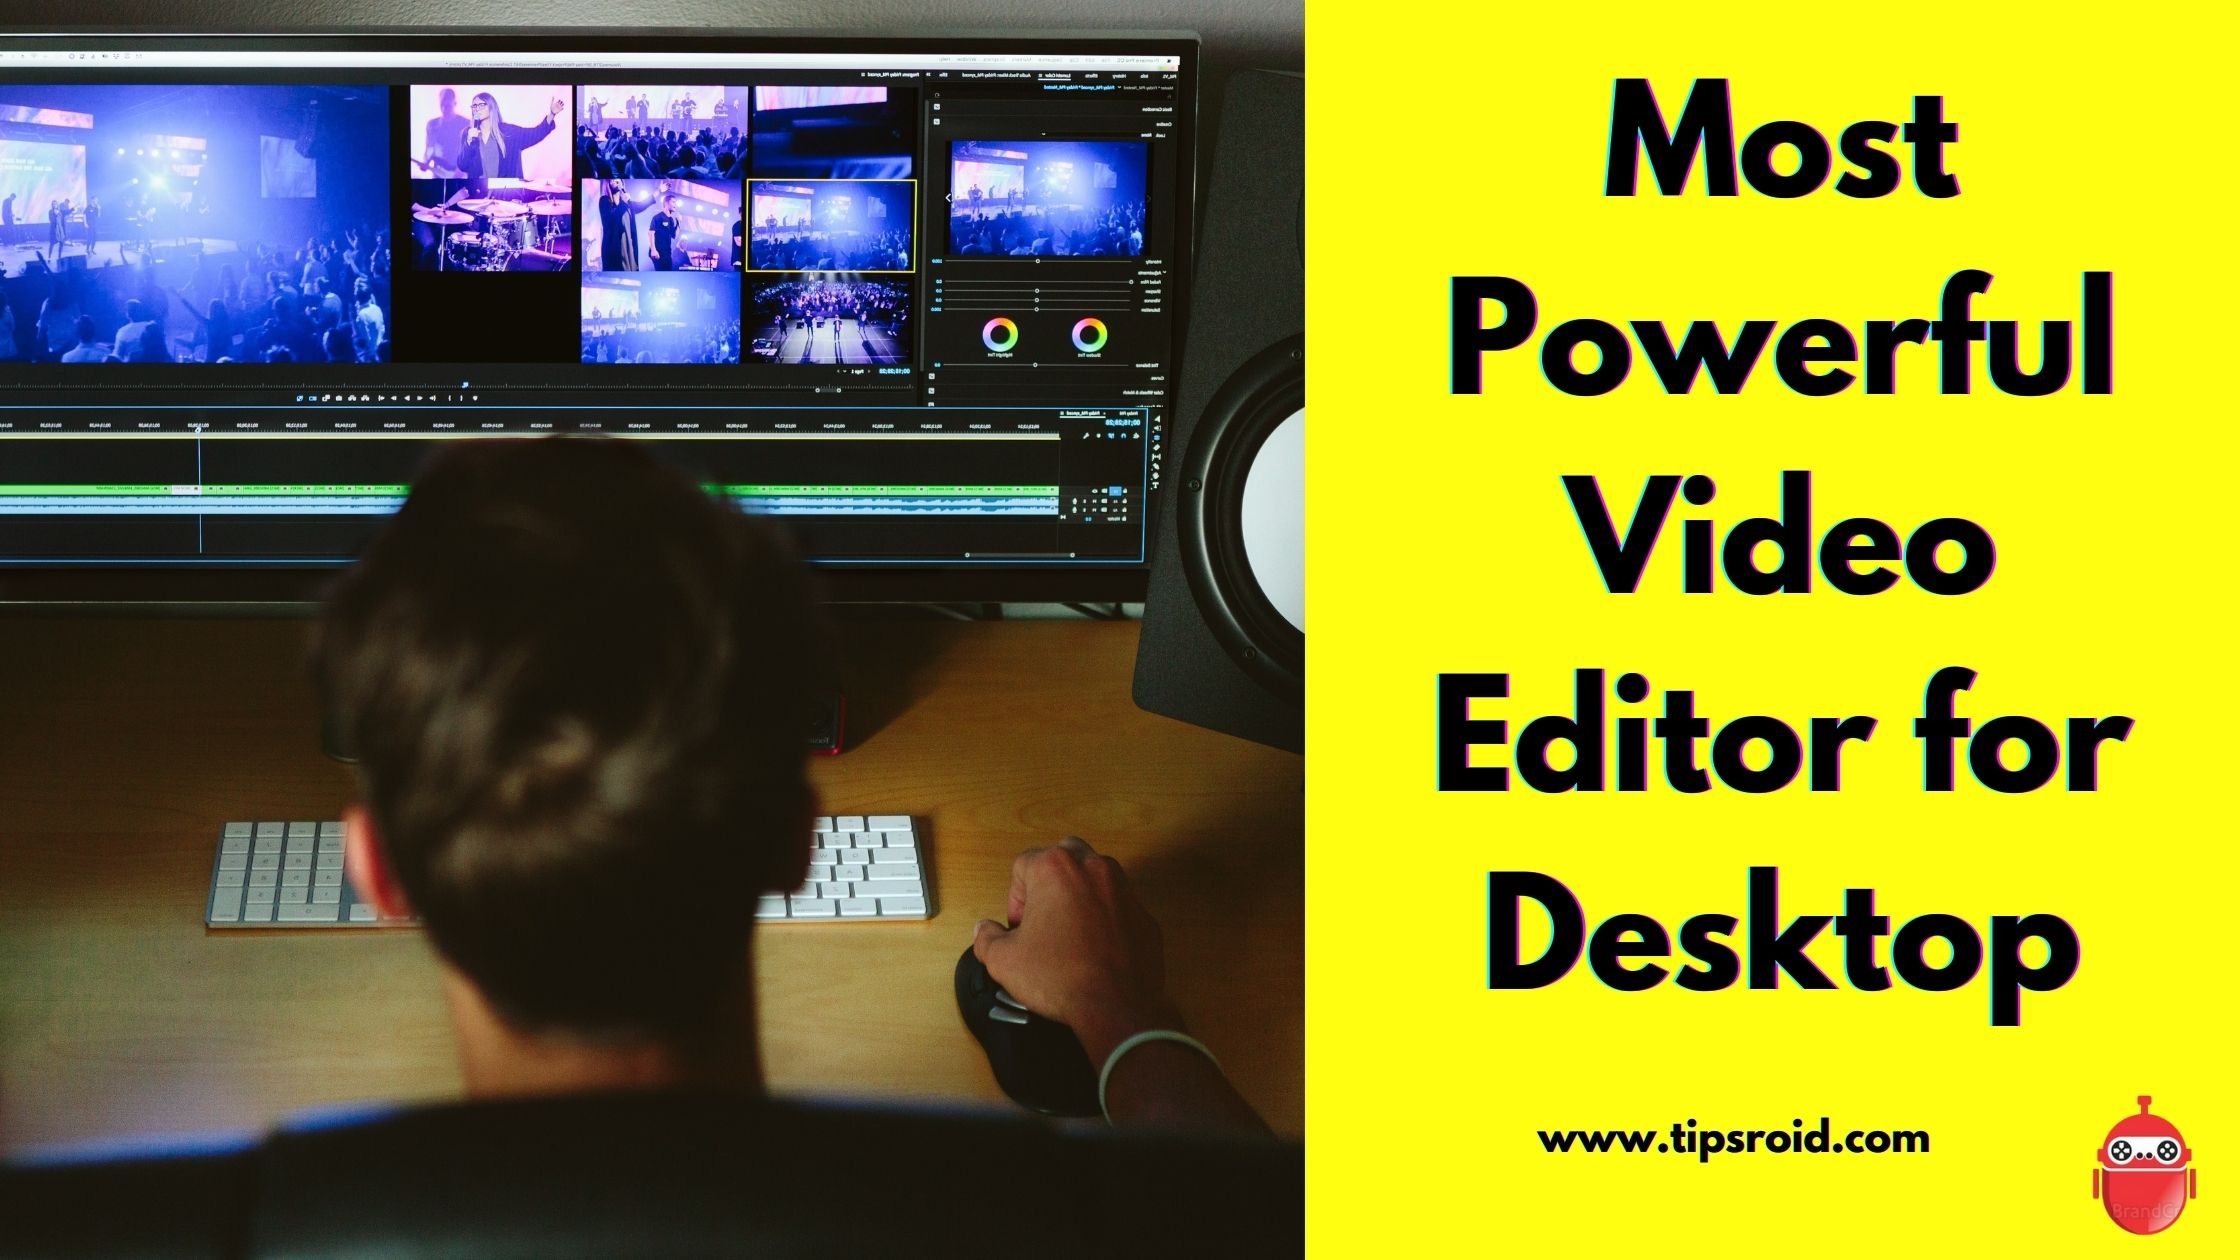 Video Editor for Desktop